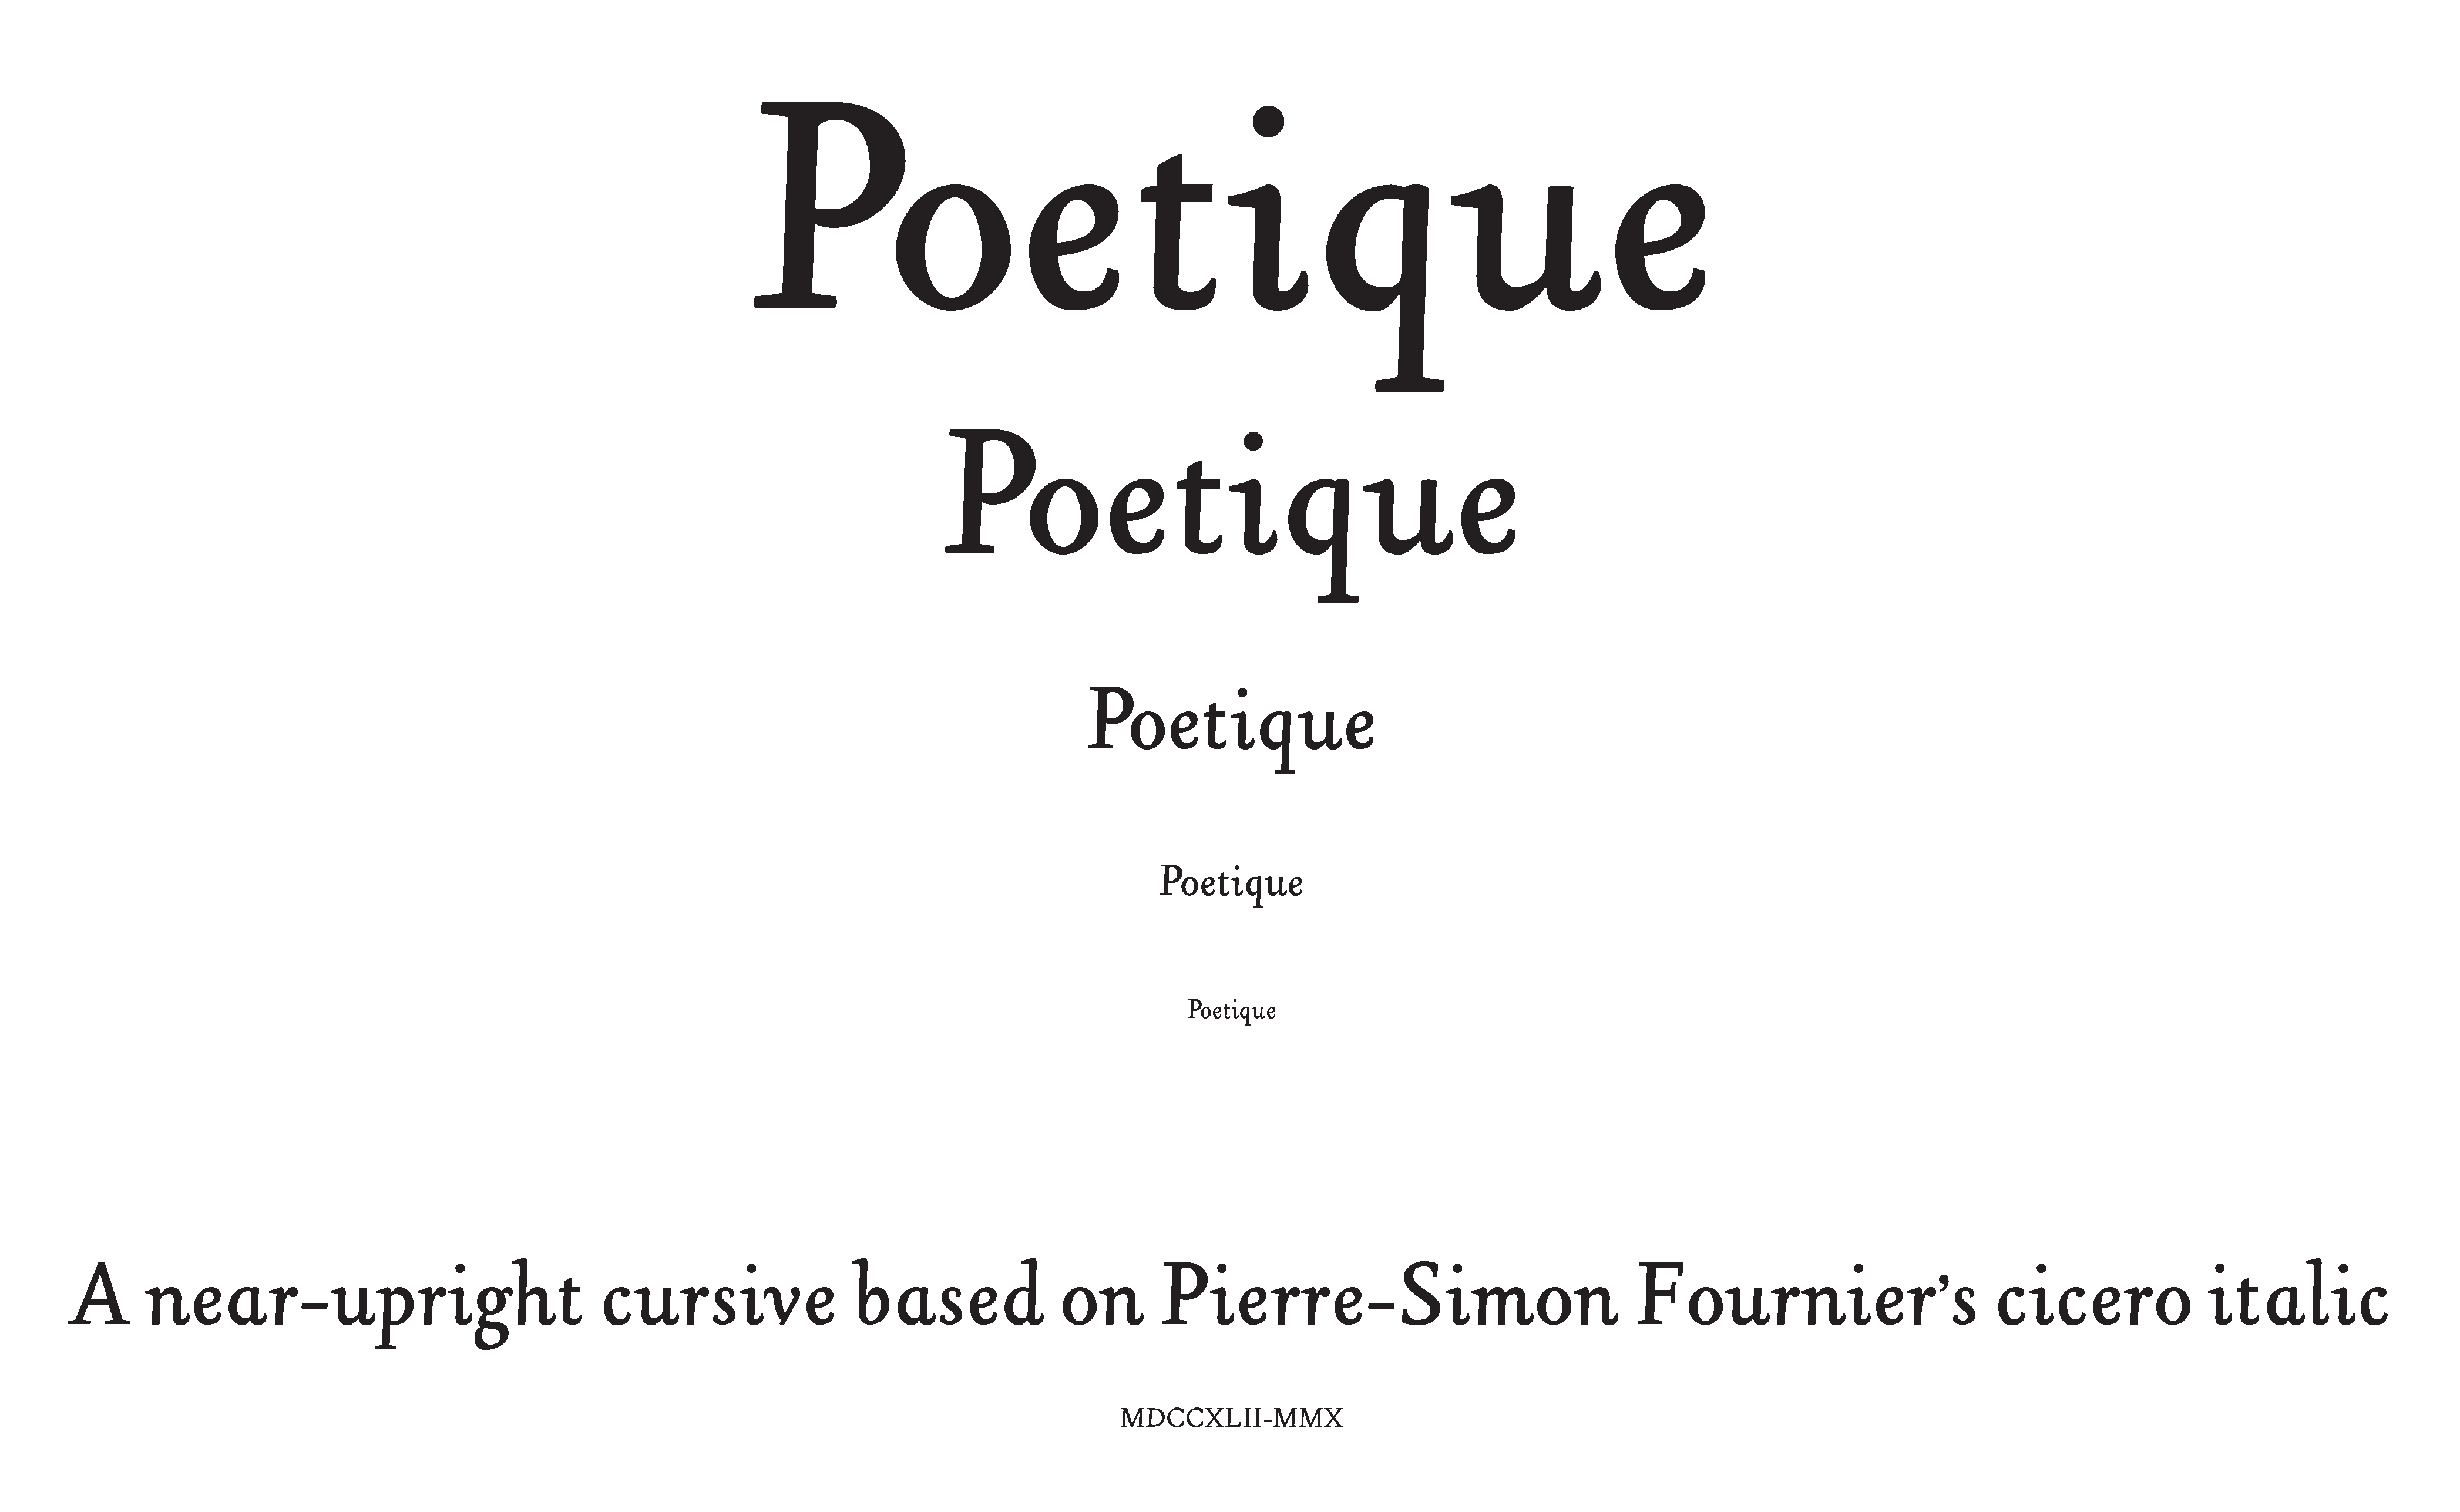 Poetique specimen